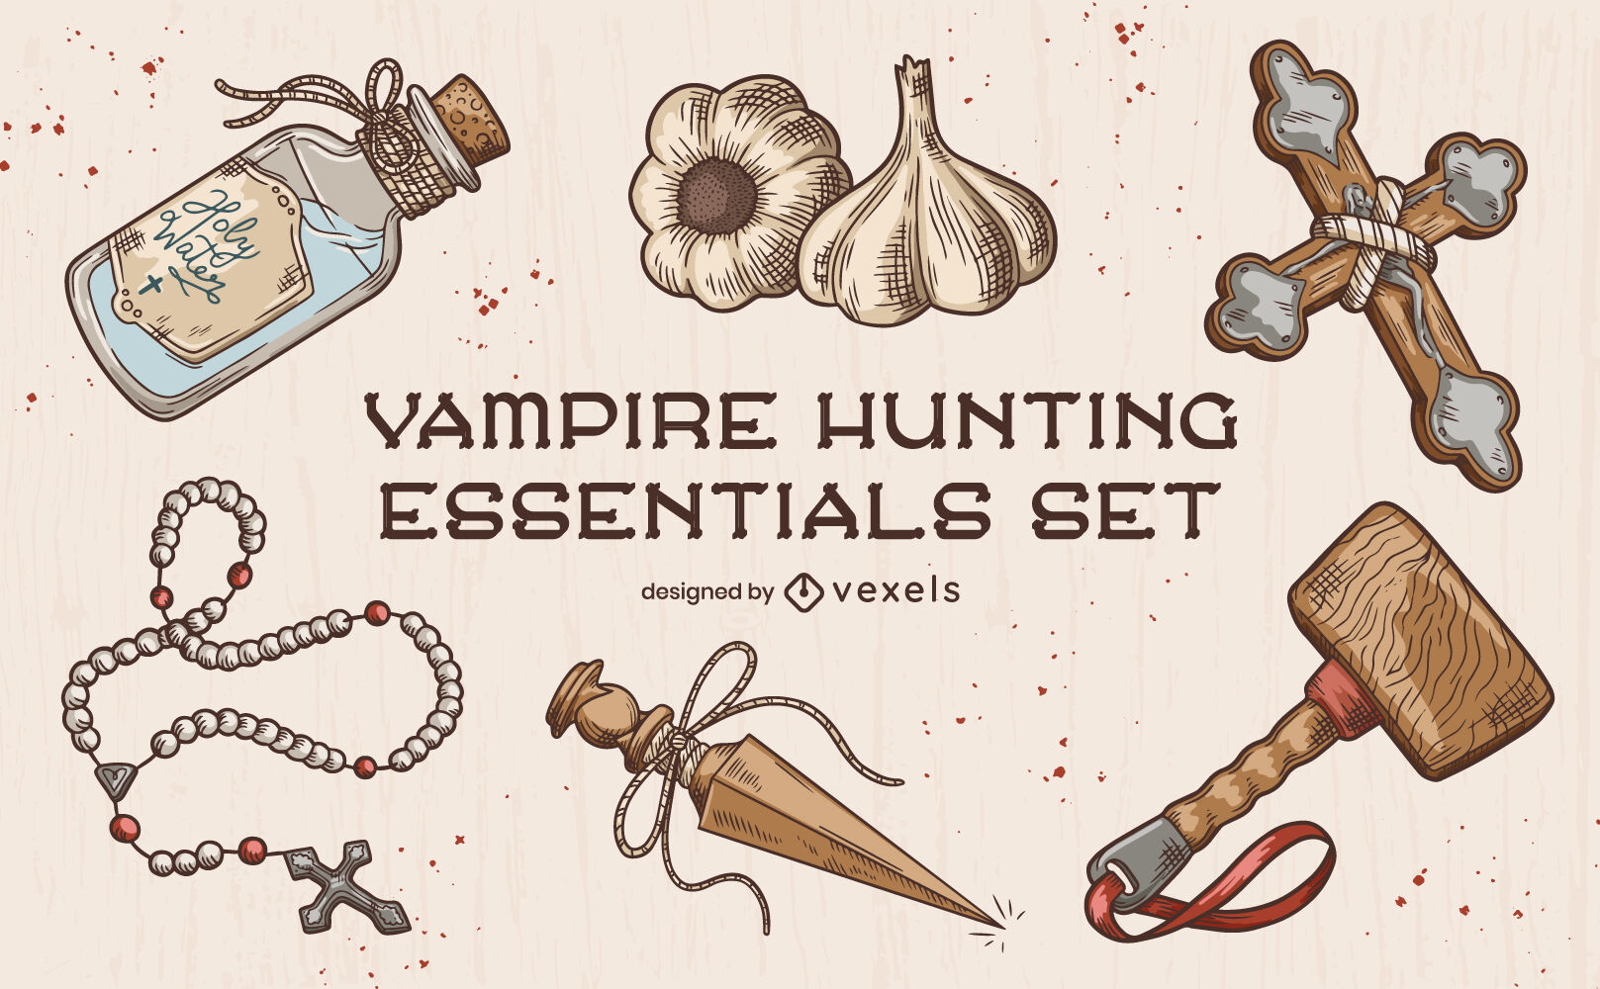 Conjunto essencial de caça aos vampiros